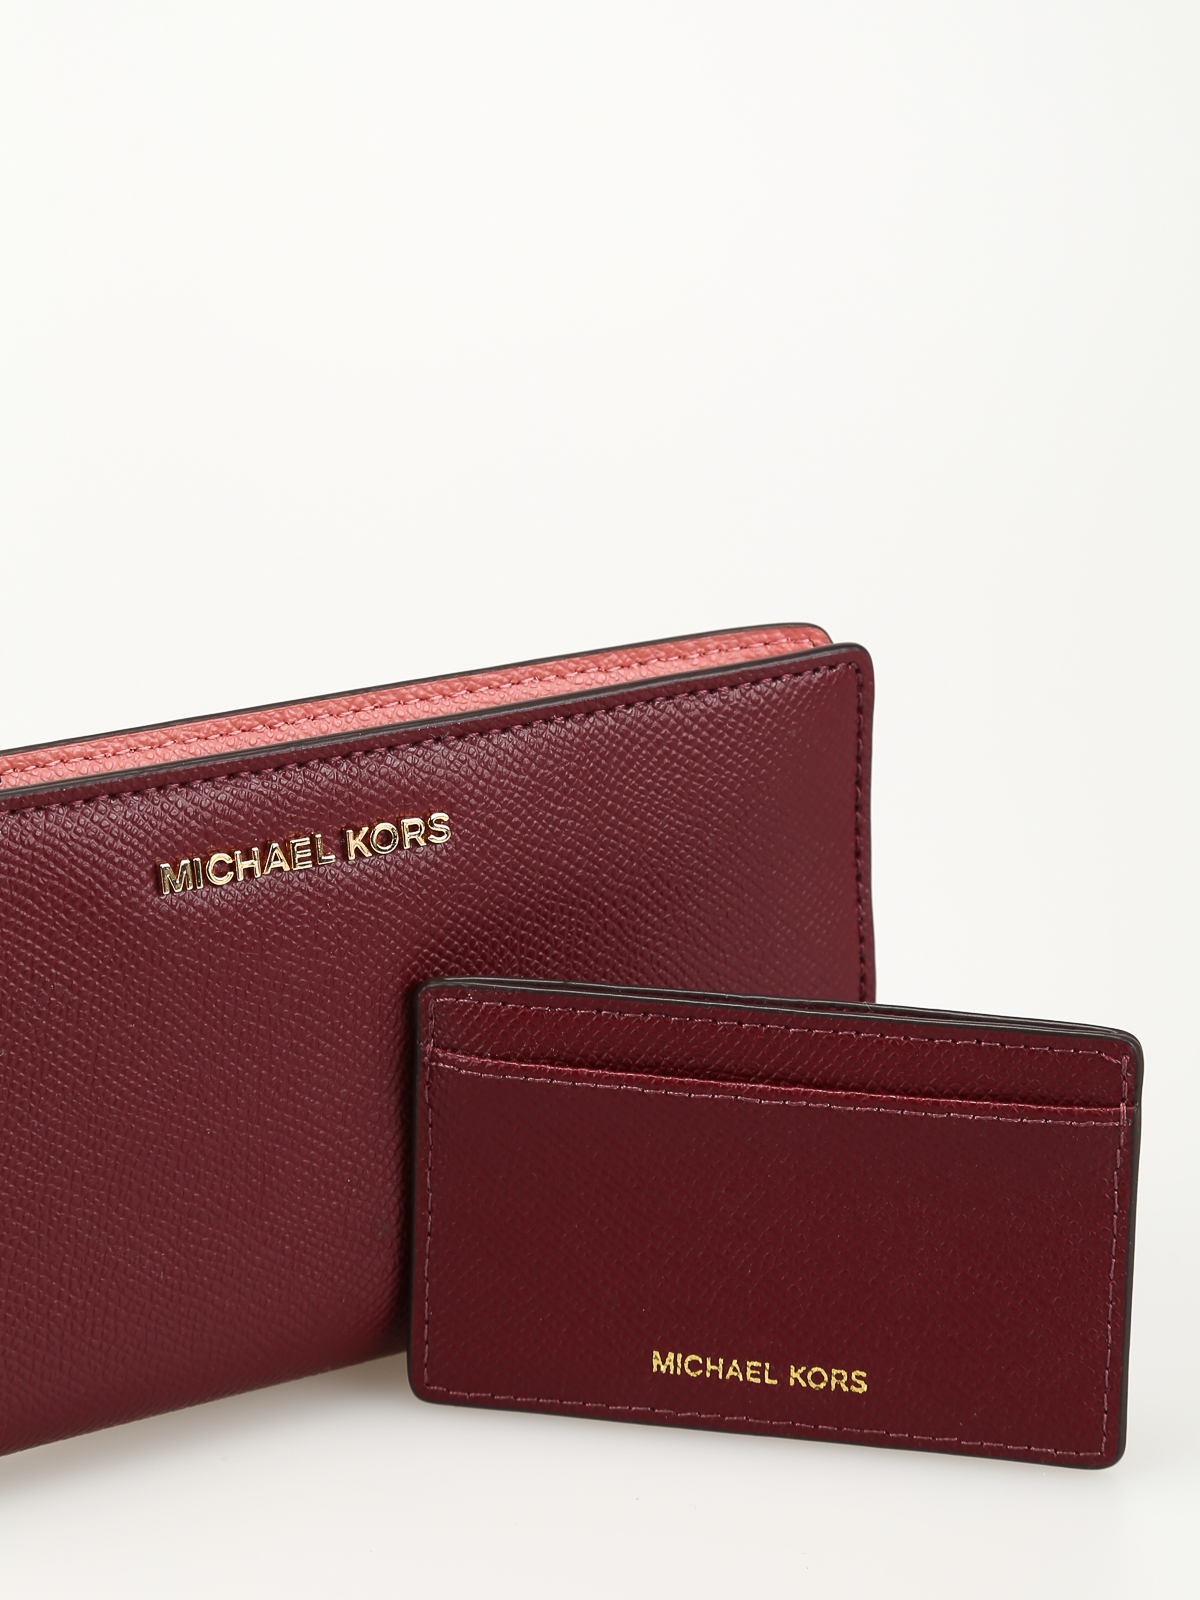 Michael Kors - Money Pieces wallet with card holder - wallets & purses - 32T8GF6D3T891